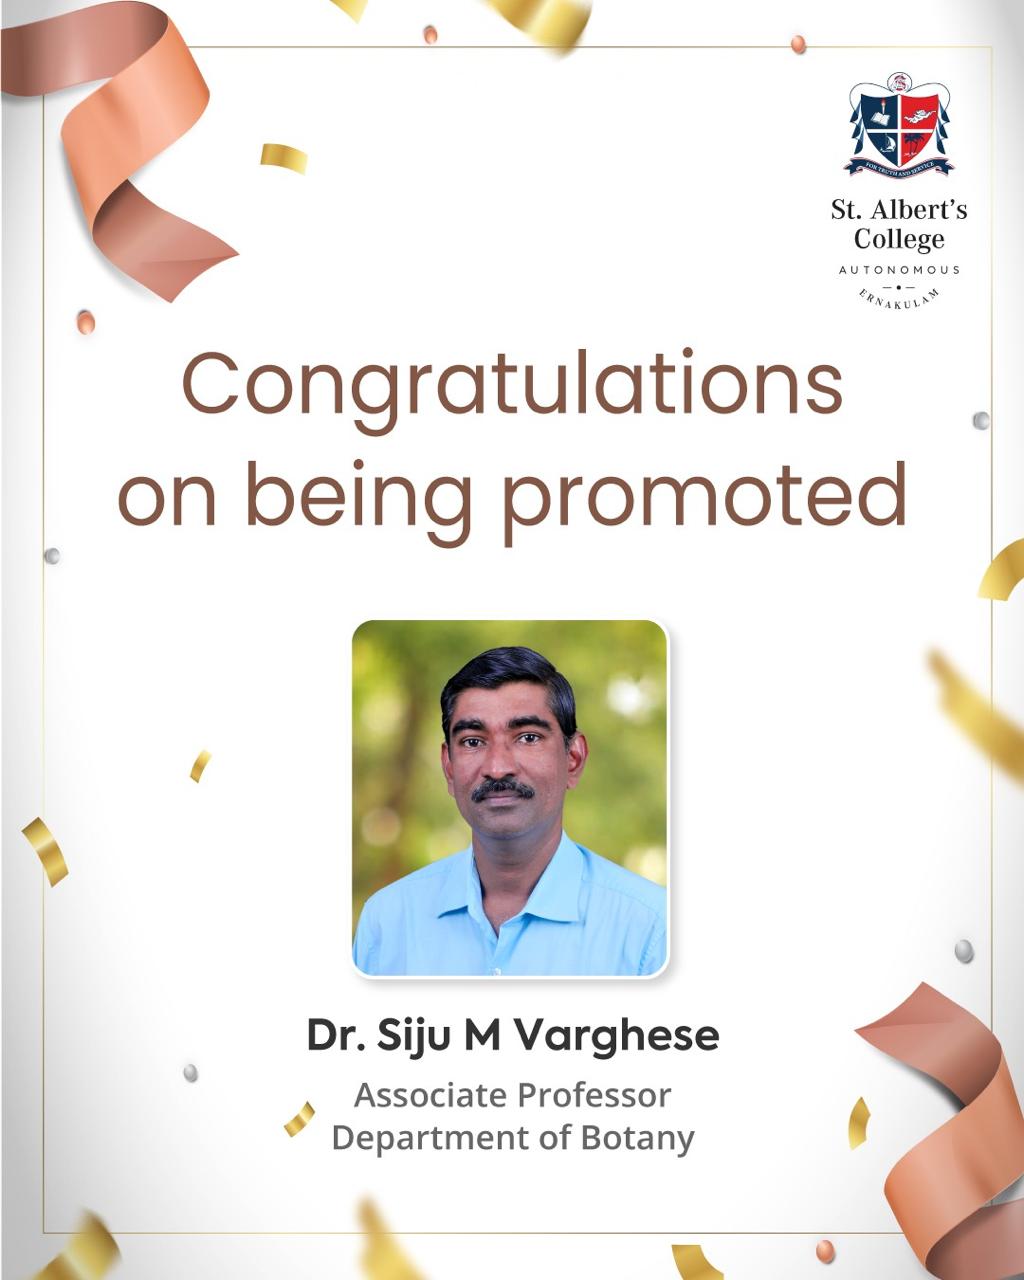 Congratulation Dr. Siju M Varghese